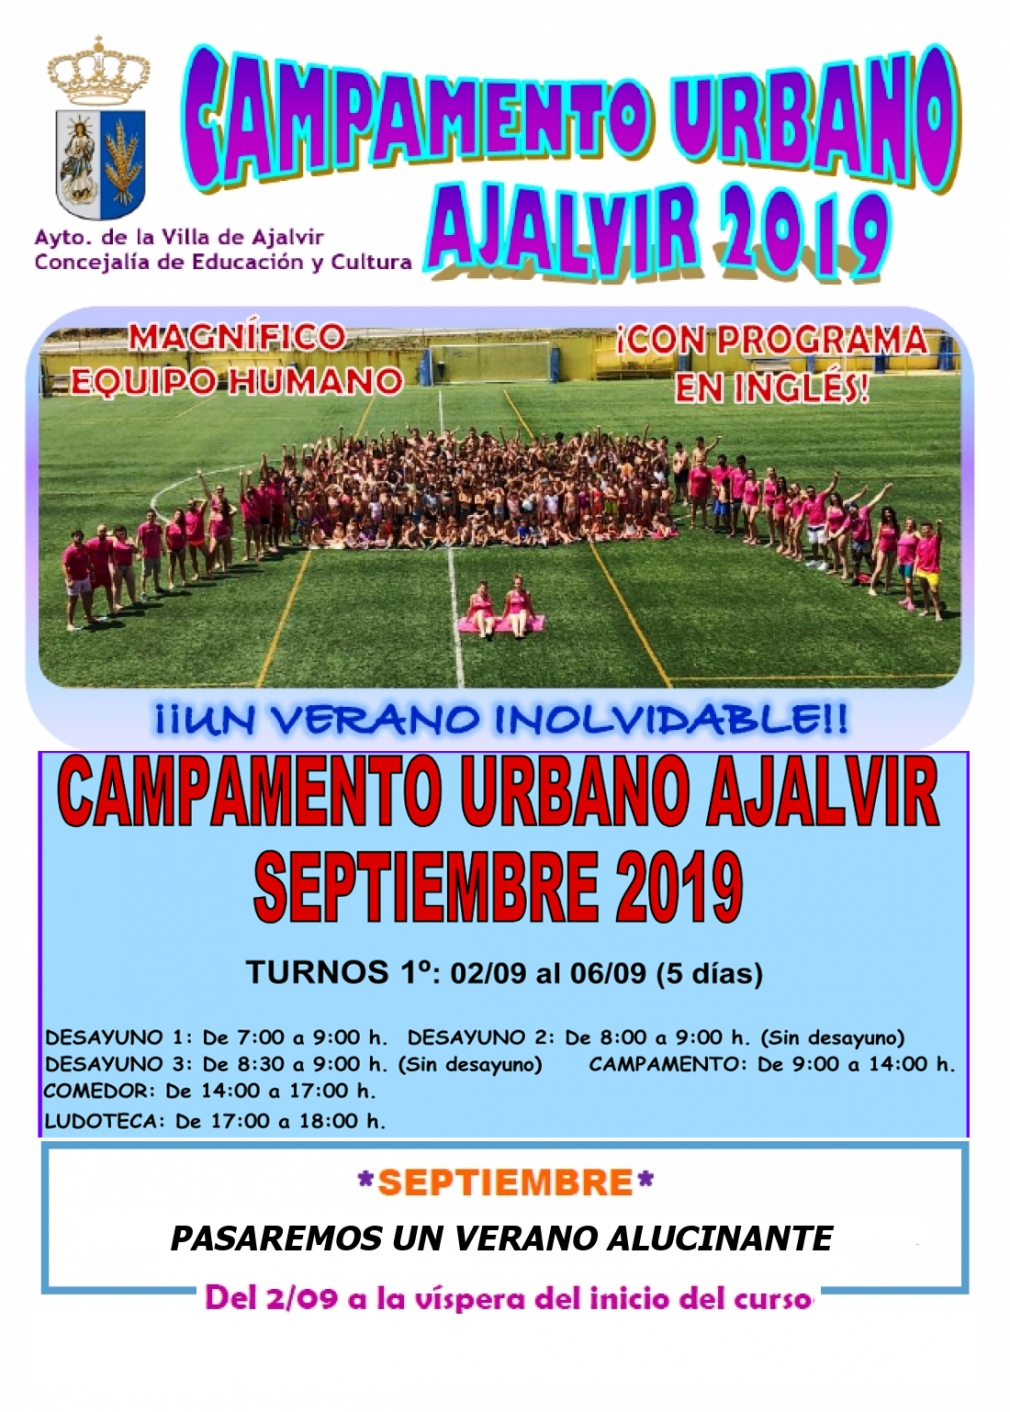 Campamento Urbano Ajalvir - Septiembre 2019